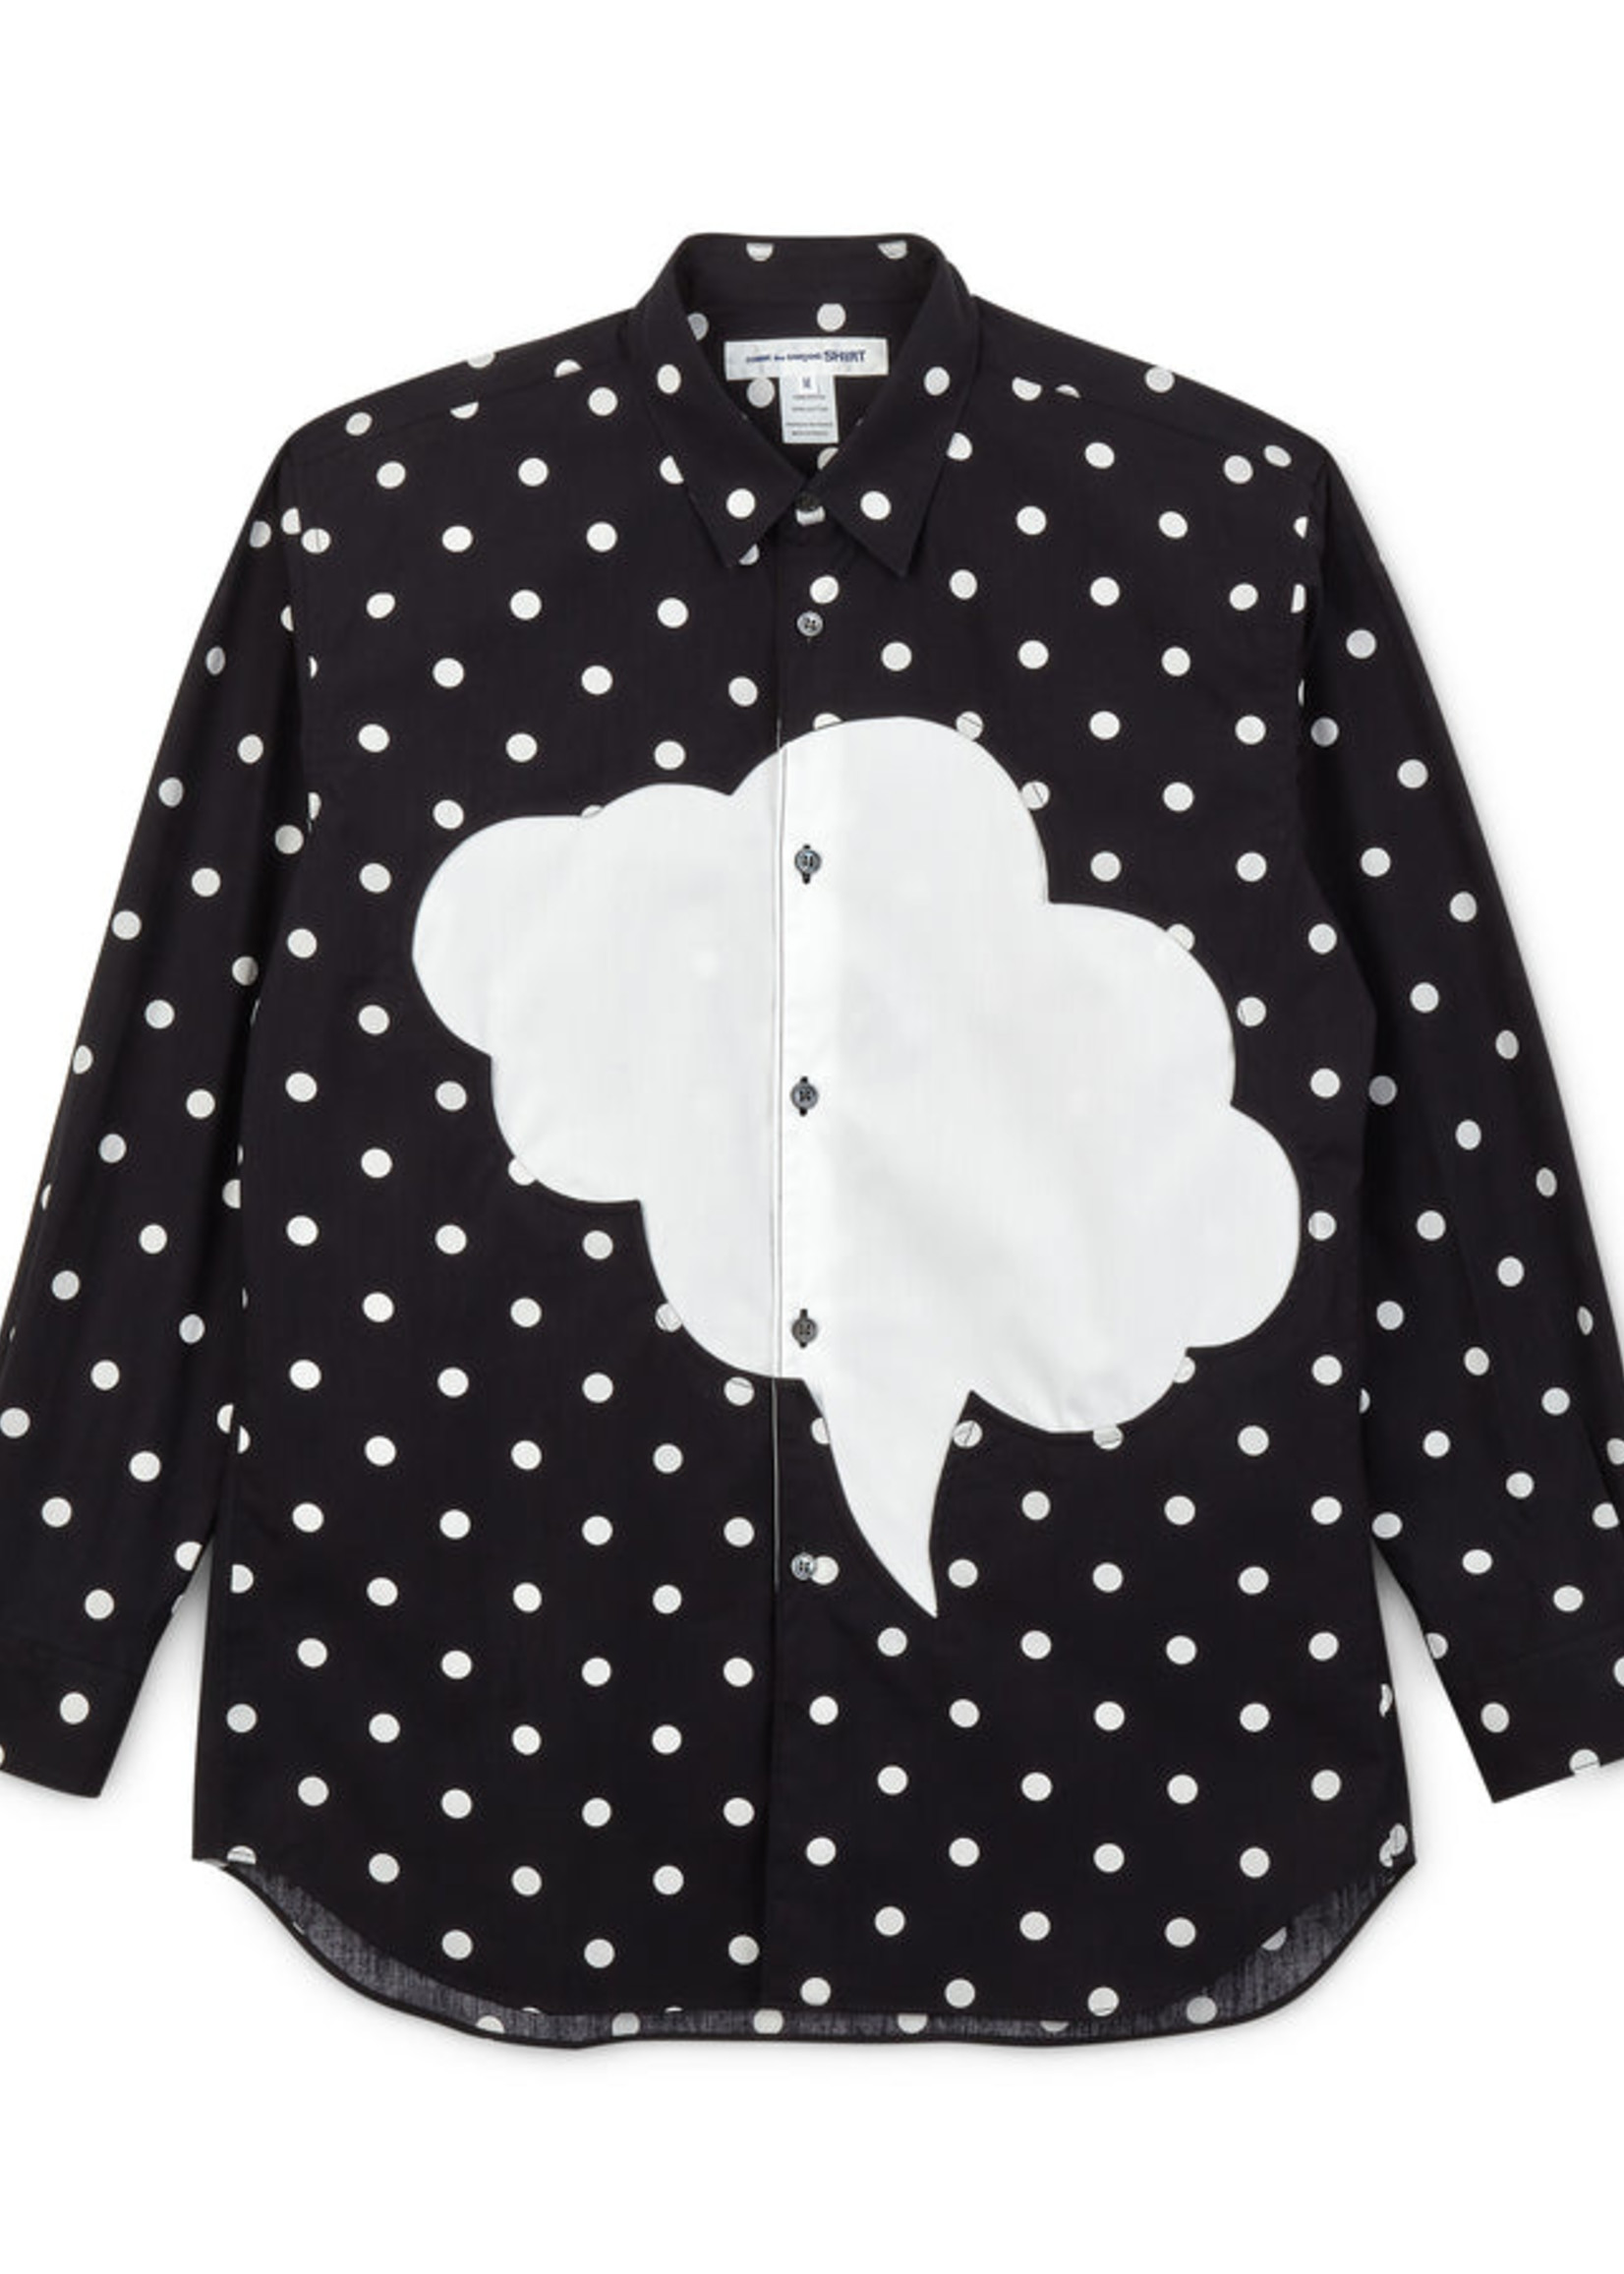 COMME des GARÇONS SHIRT Polka Dot Button Up Shirt with Inset white Bubble